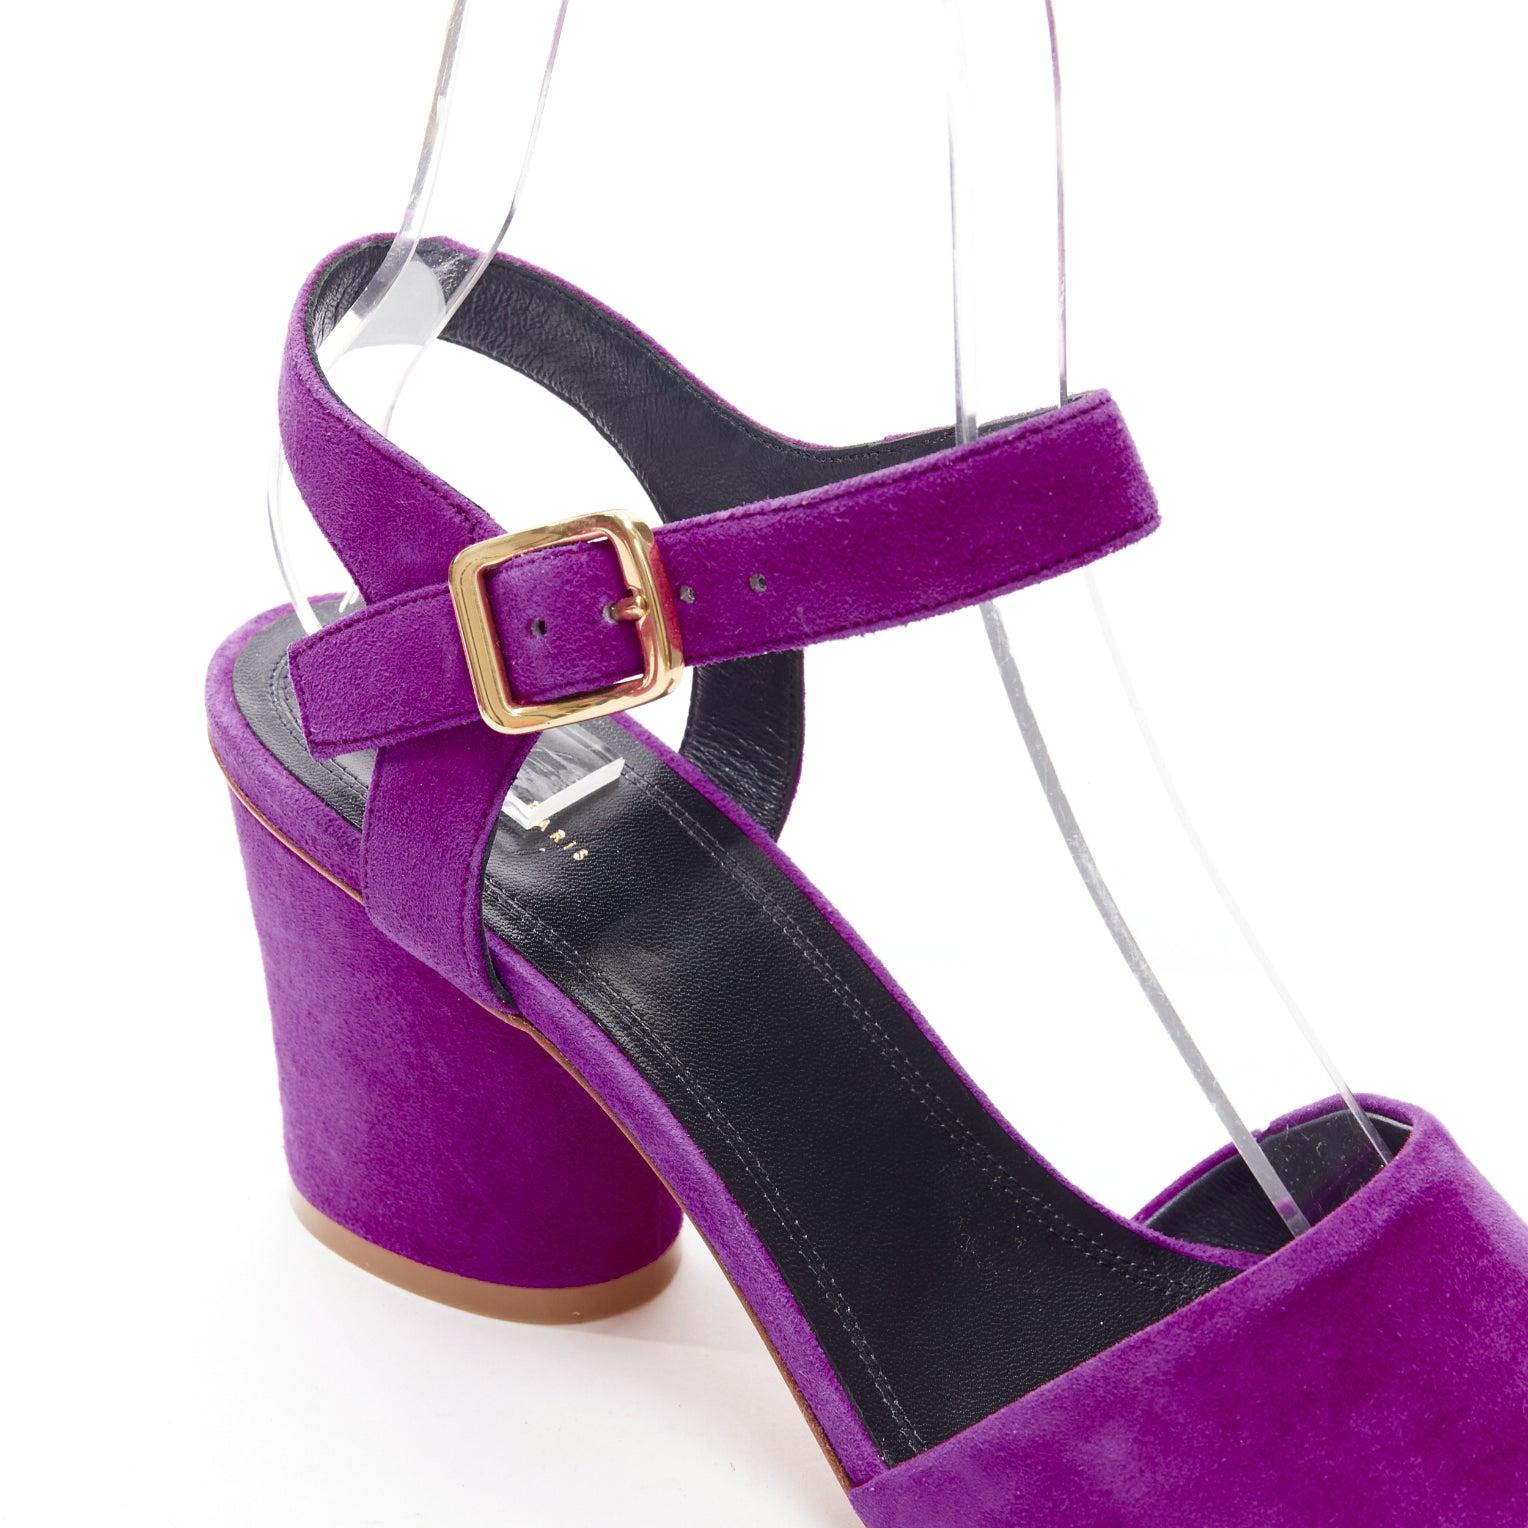 Women's OLD CELINE Phoebe Philo purple suede gold buckle strappy sandal heels EU38